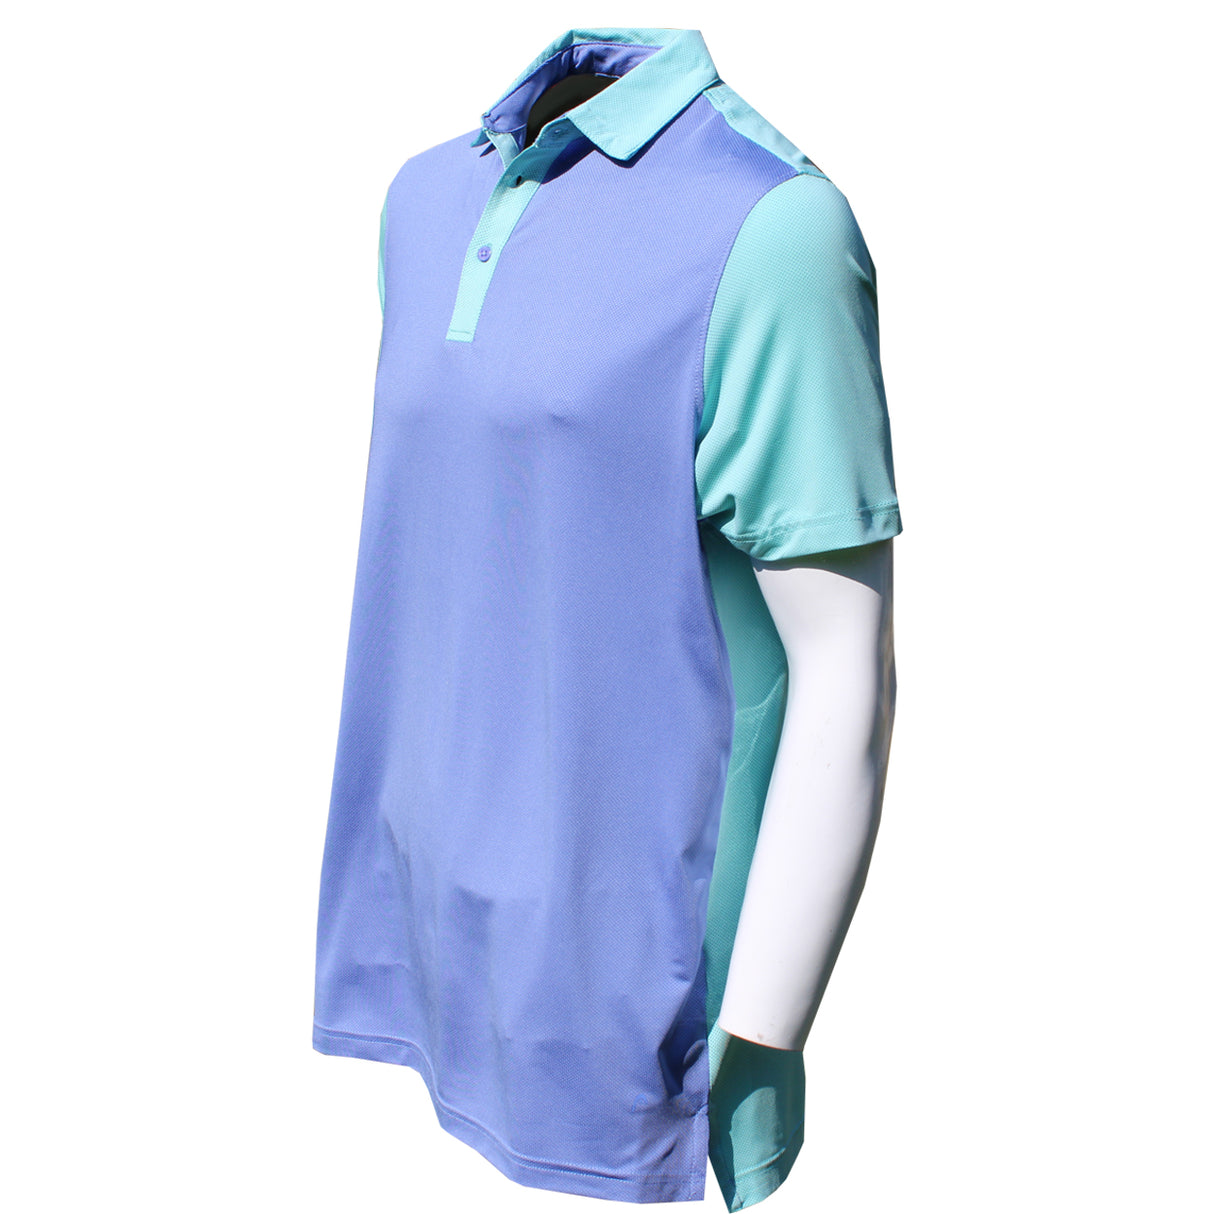 Head Men's Two-Tone Dot Print Polo Golf Shirt